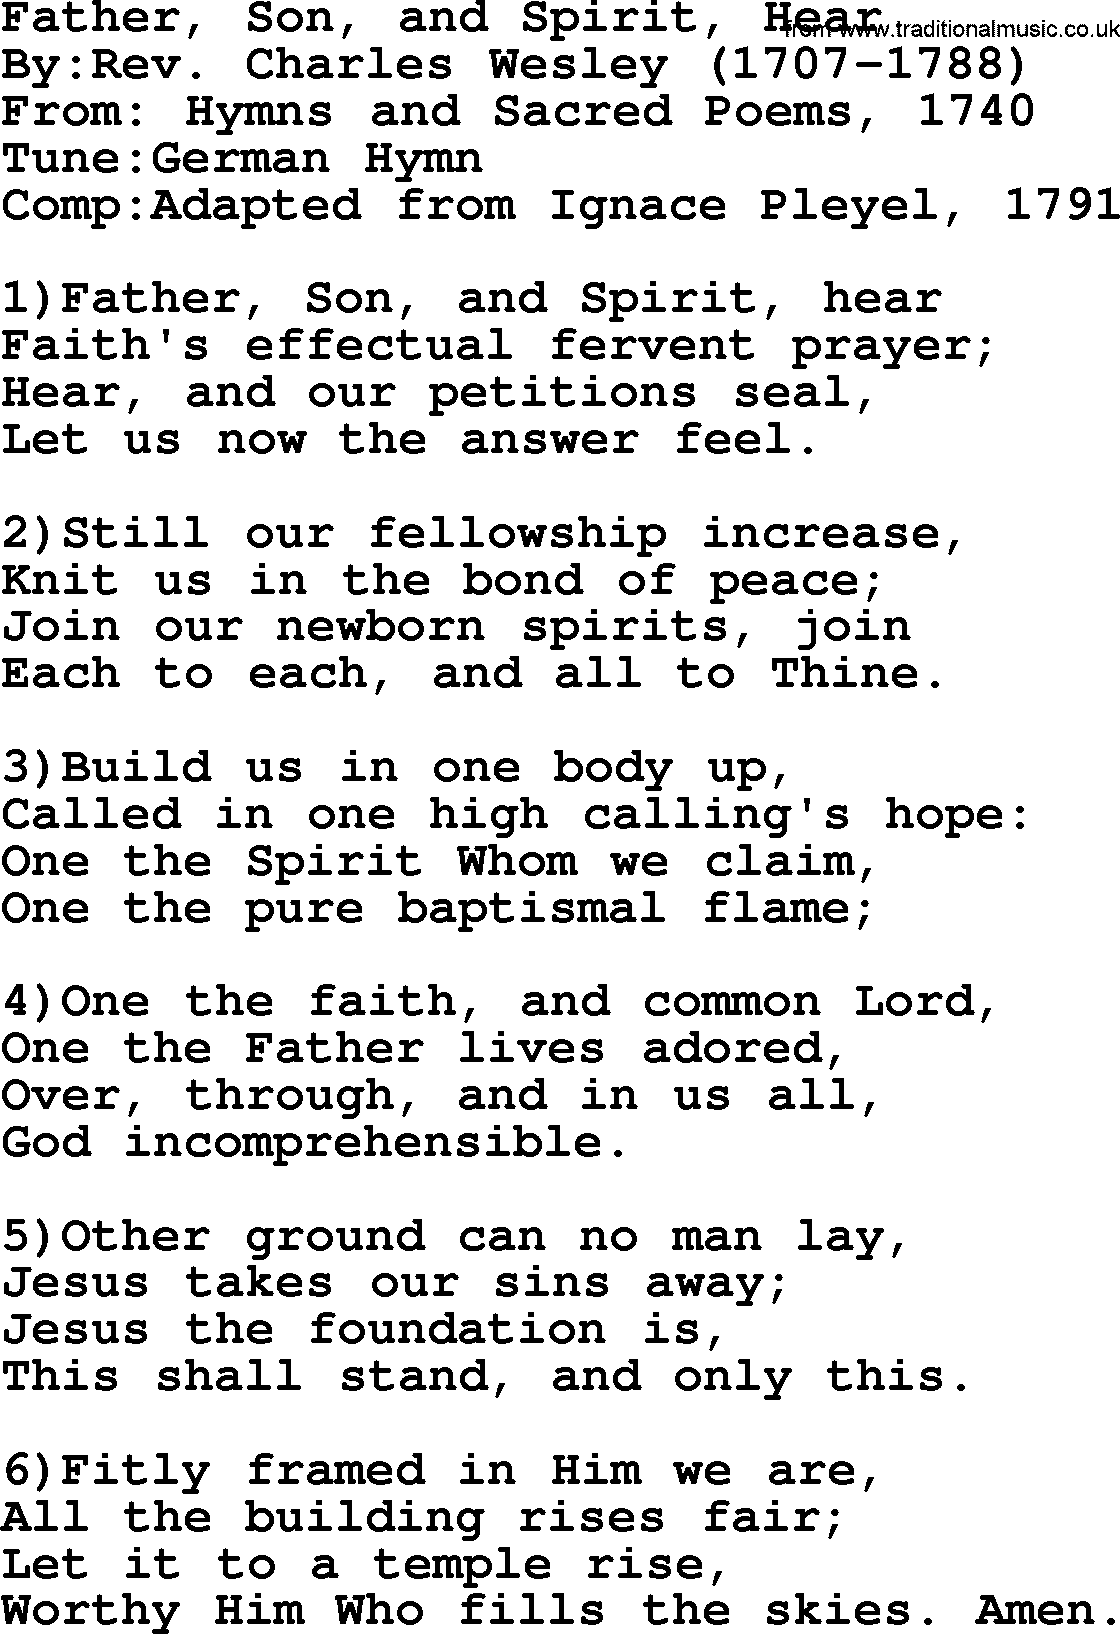 Methodist Hymn: Father, Son, And Spirit, Hear, lyrics